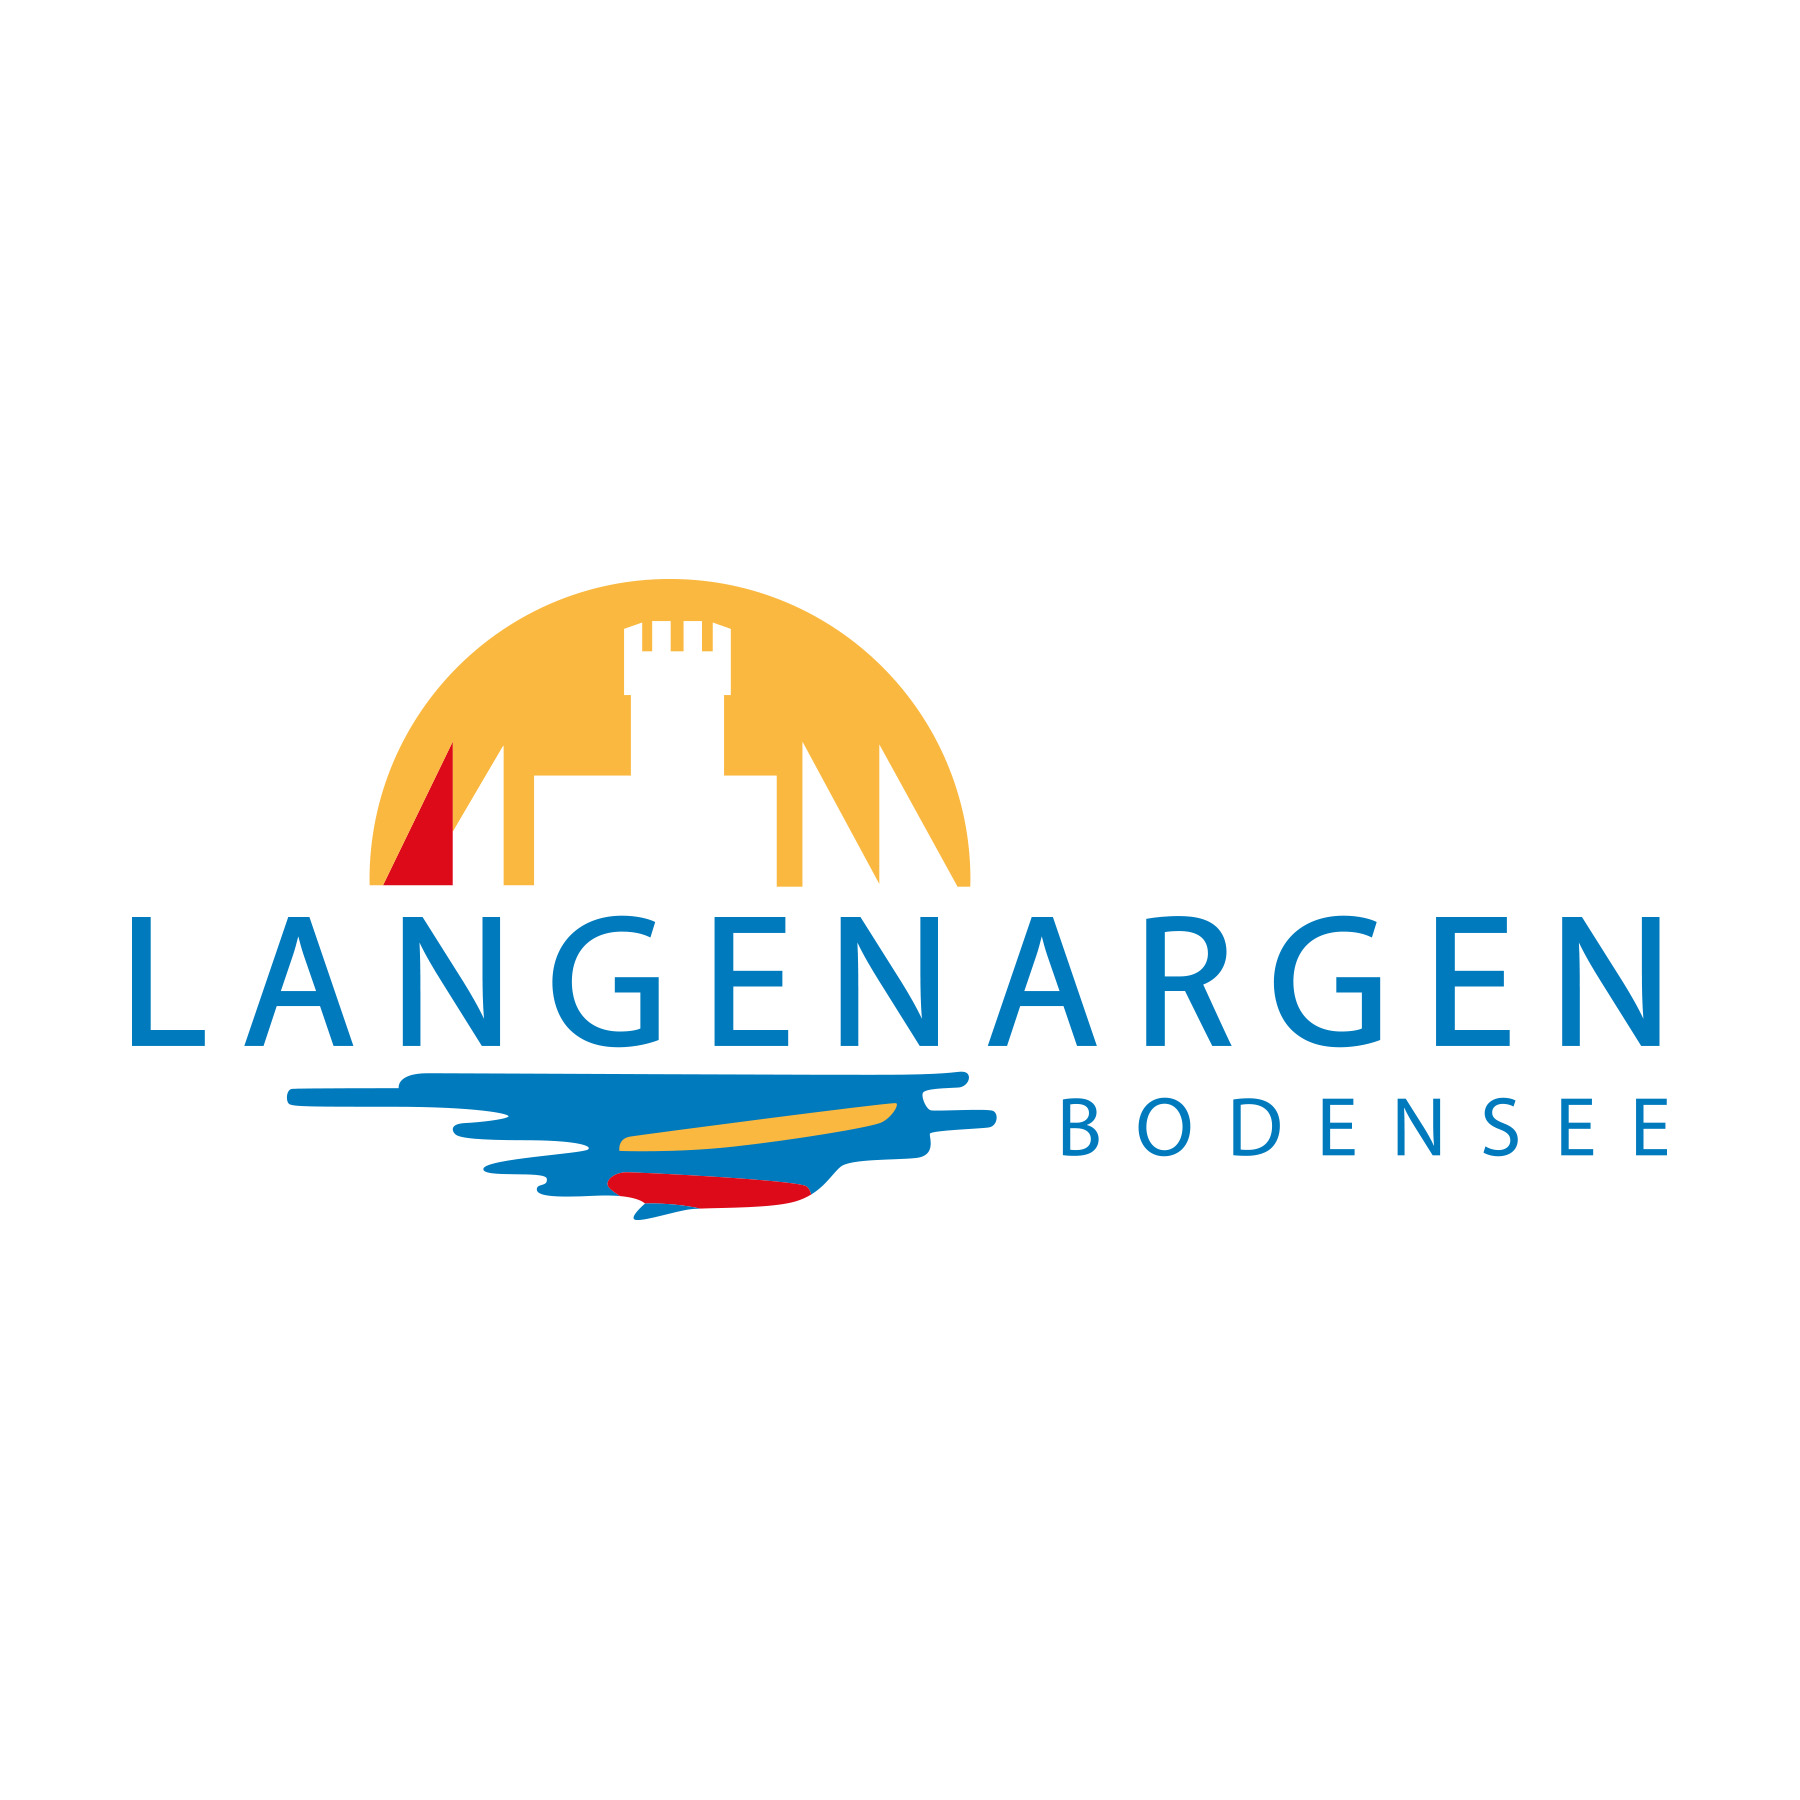 Veranstalter: Gemeinde Langenargen